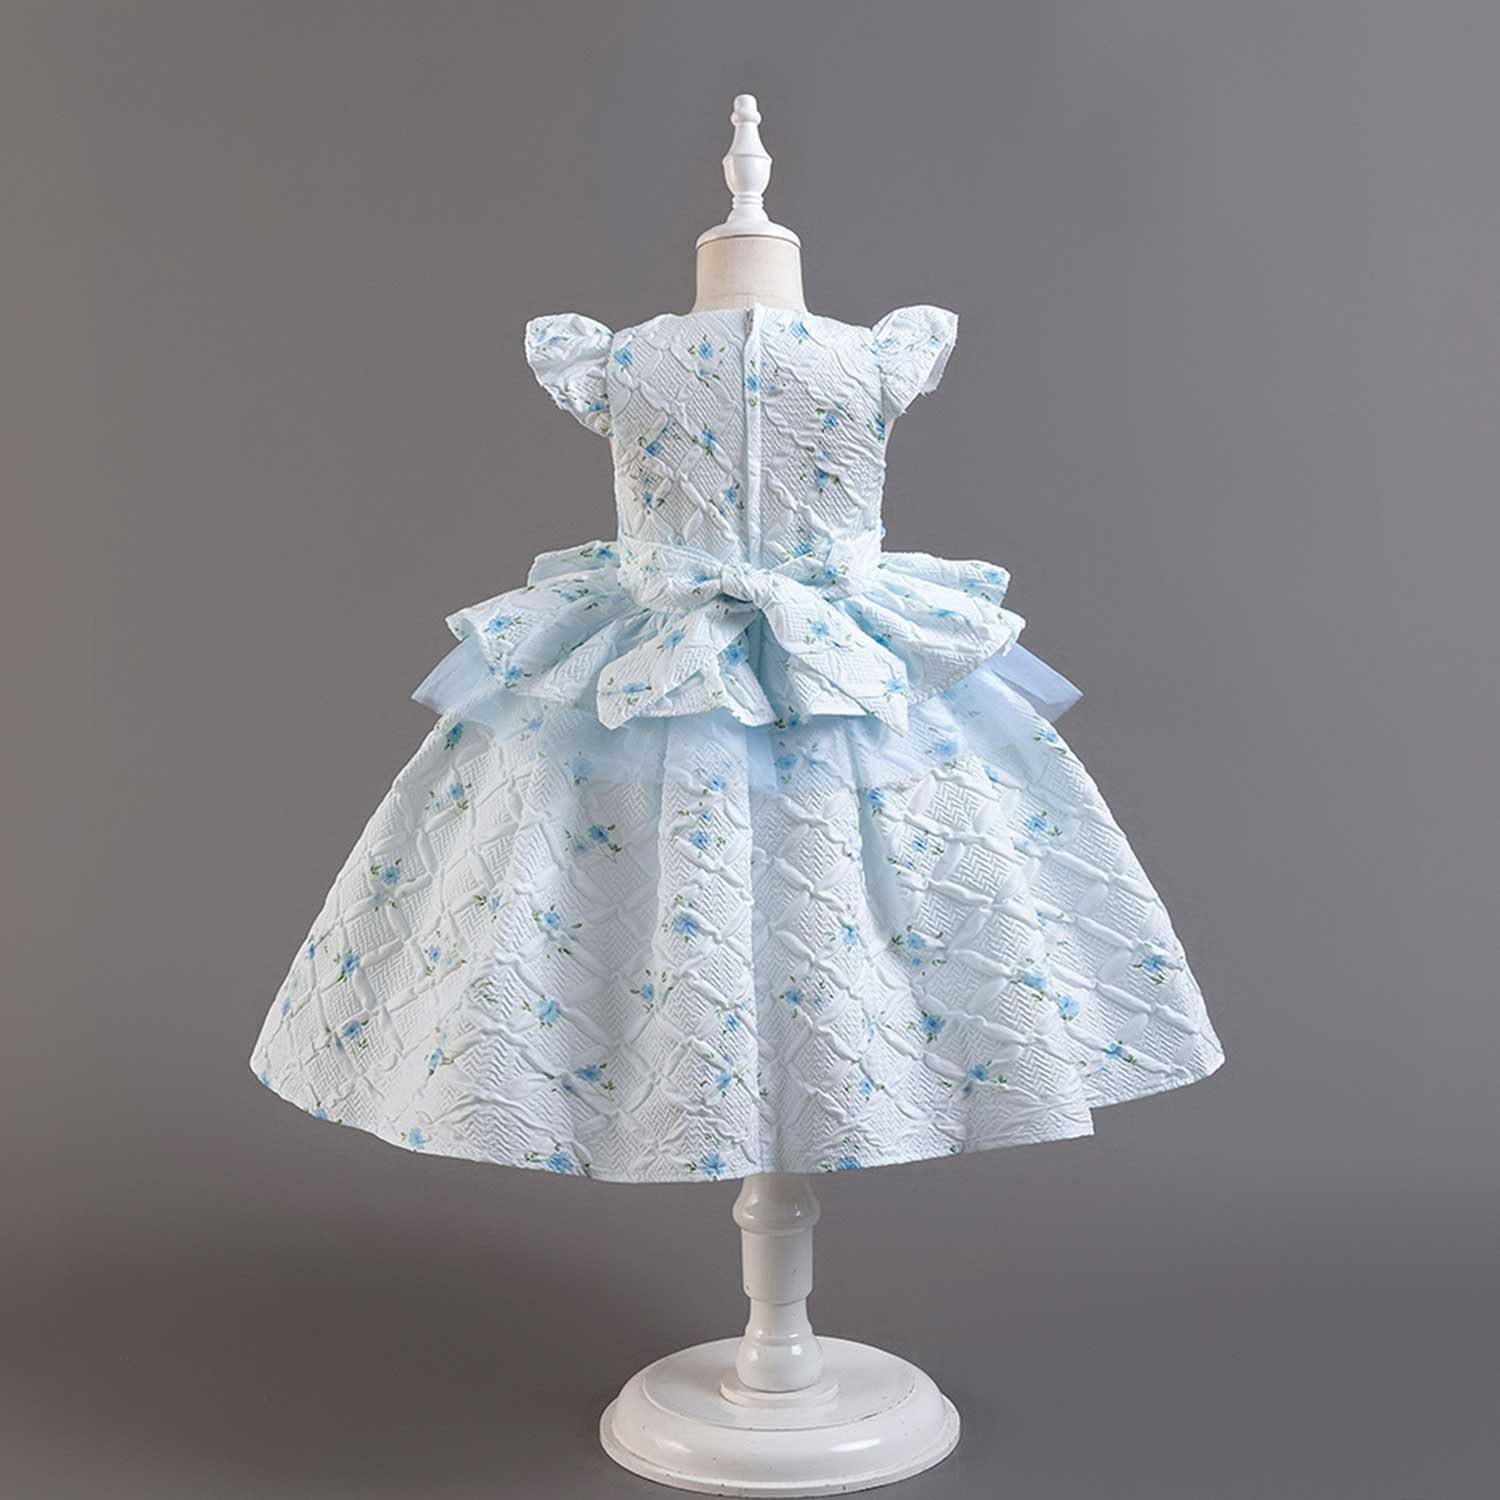 Daisred Tüllkleid Kinderkleider Blumenkleider Ballkleid Blau Prinzessinnenkleider